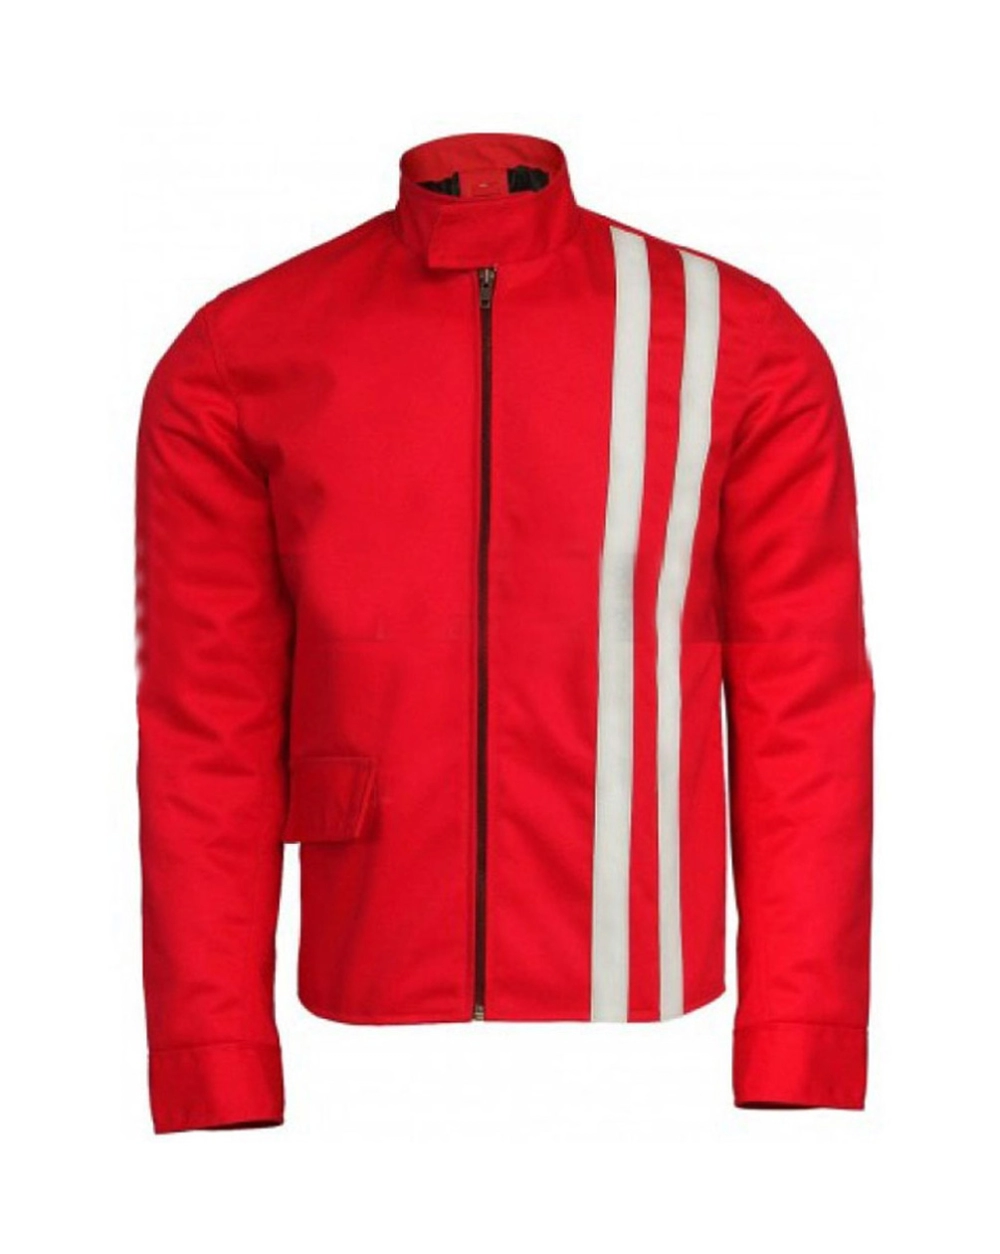 Elvis Presley Speedway Red Jacket